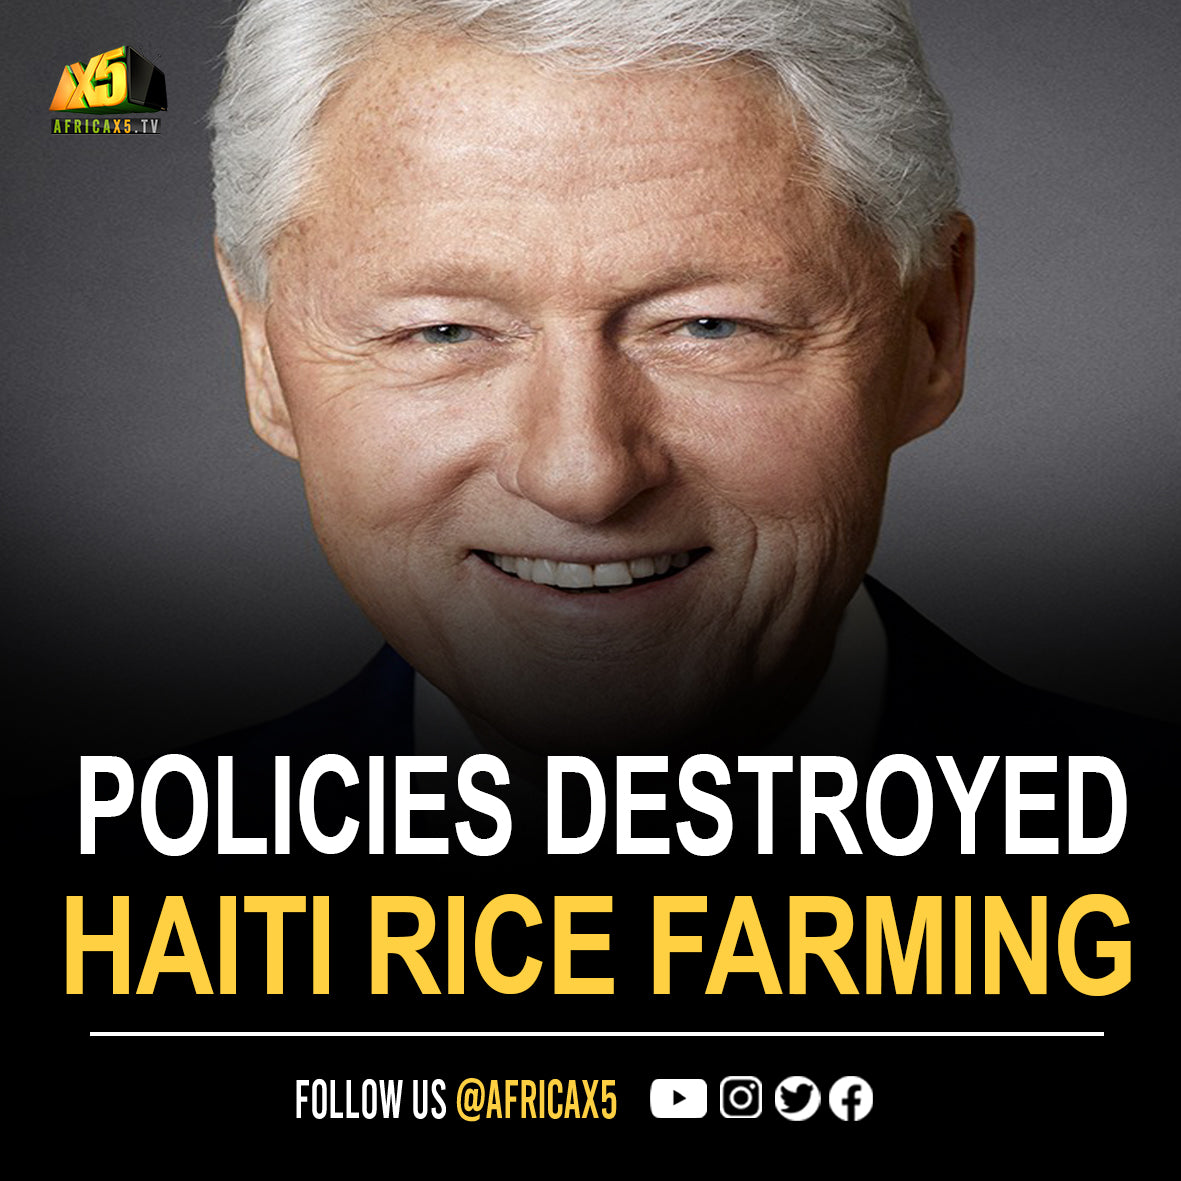 Bill Clinton’s Trade Policies Destroyed Haitian Rice Farming